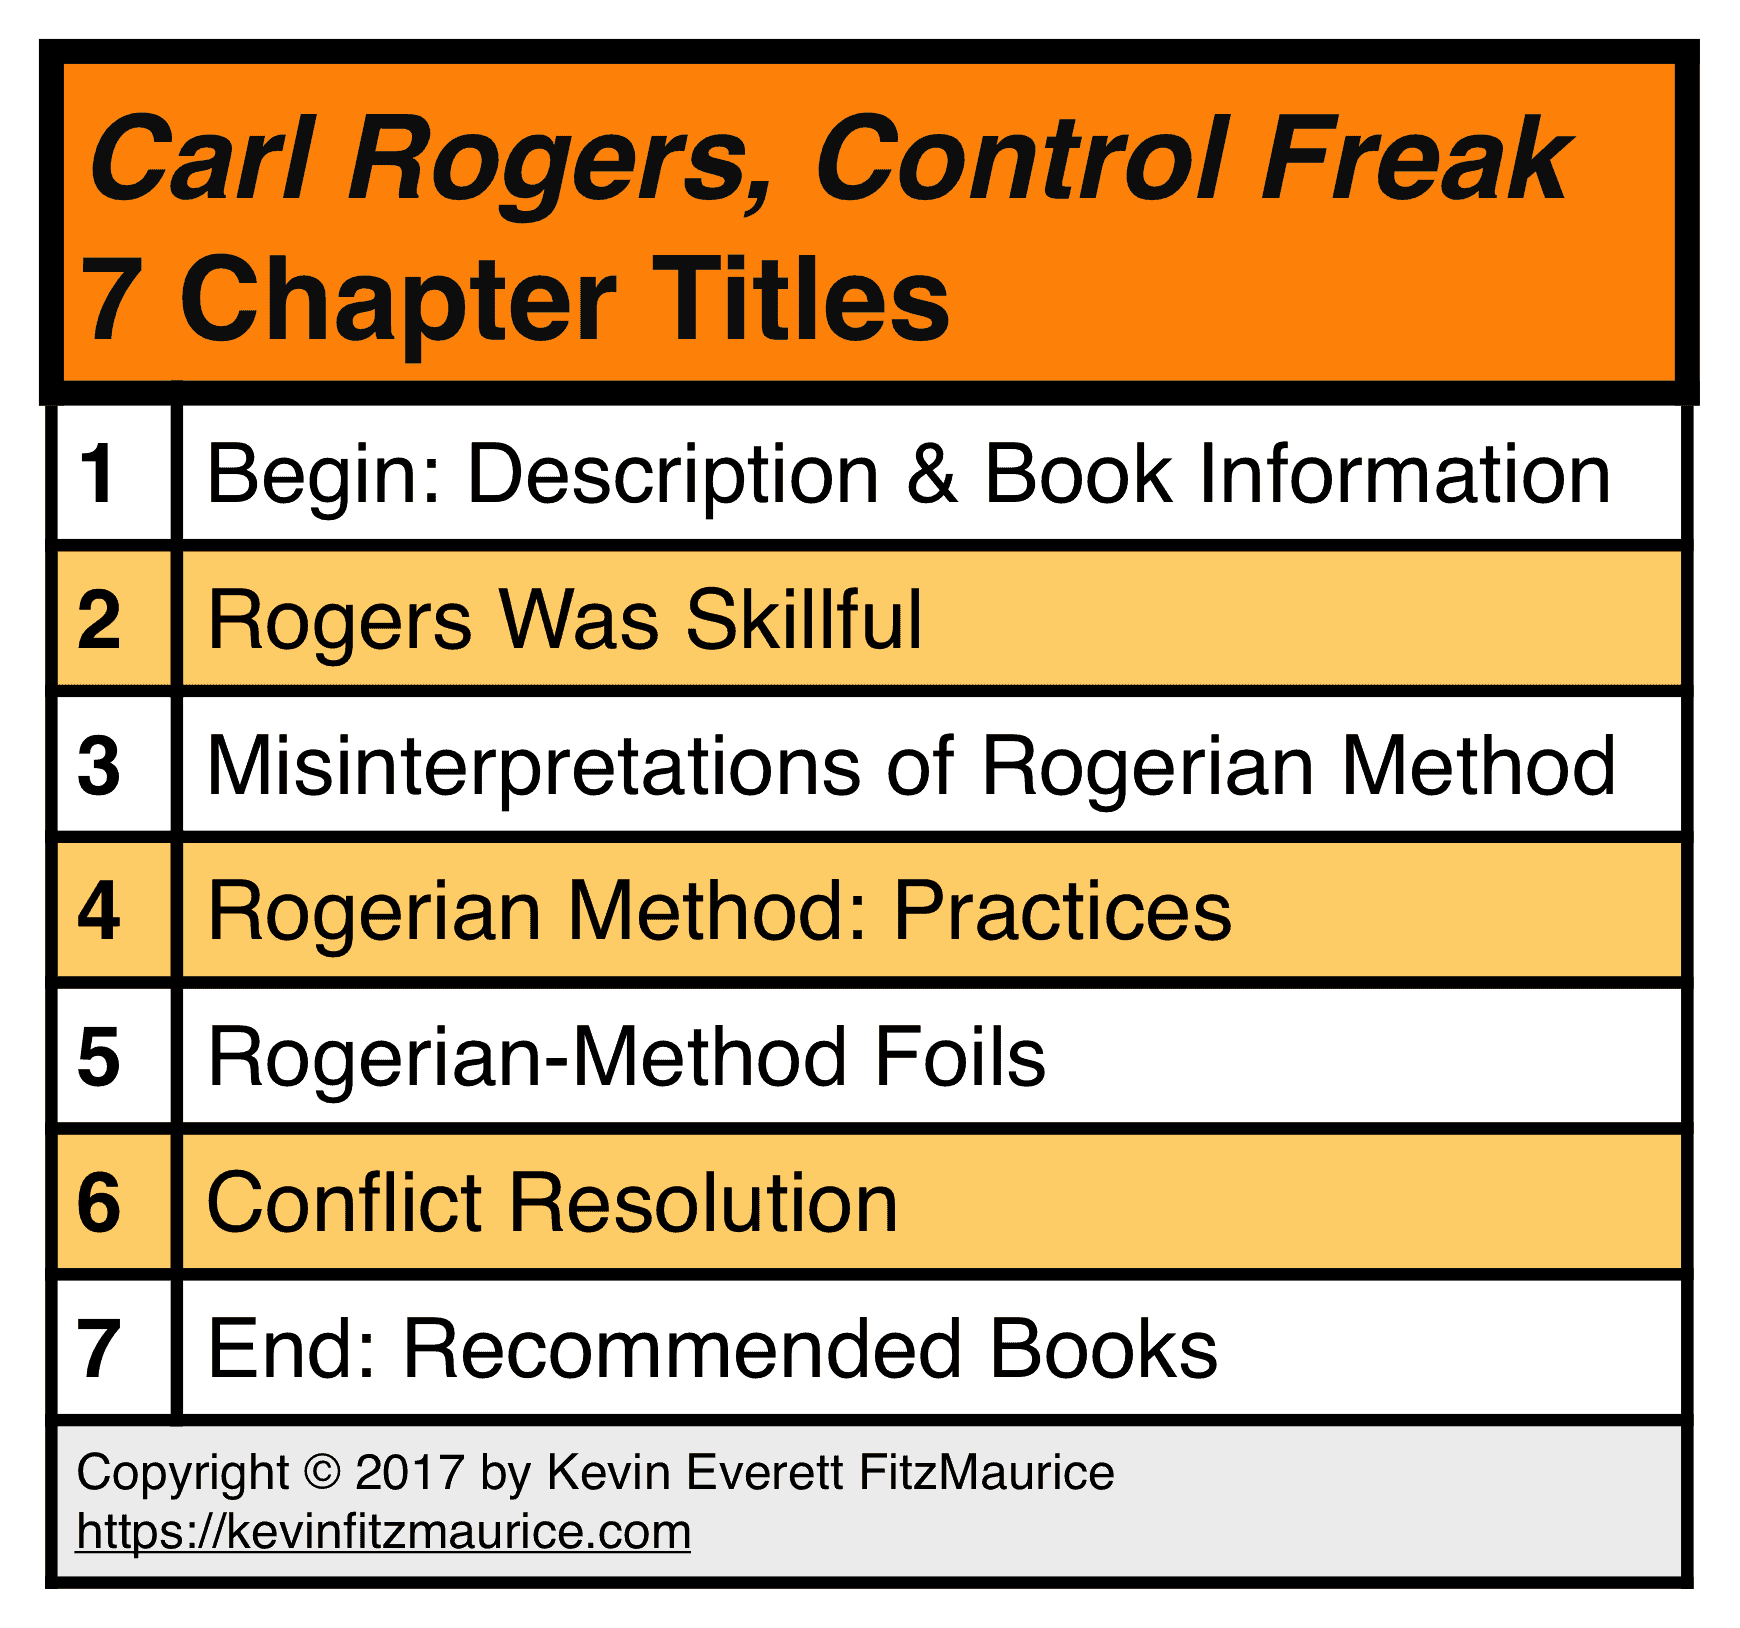 Carl Rogers, Control Freak Chapters